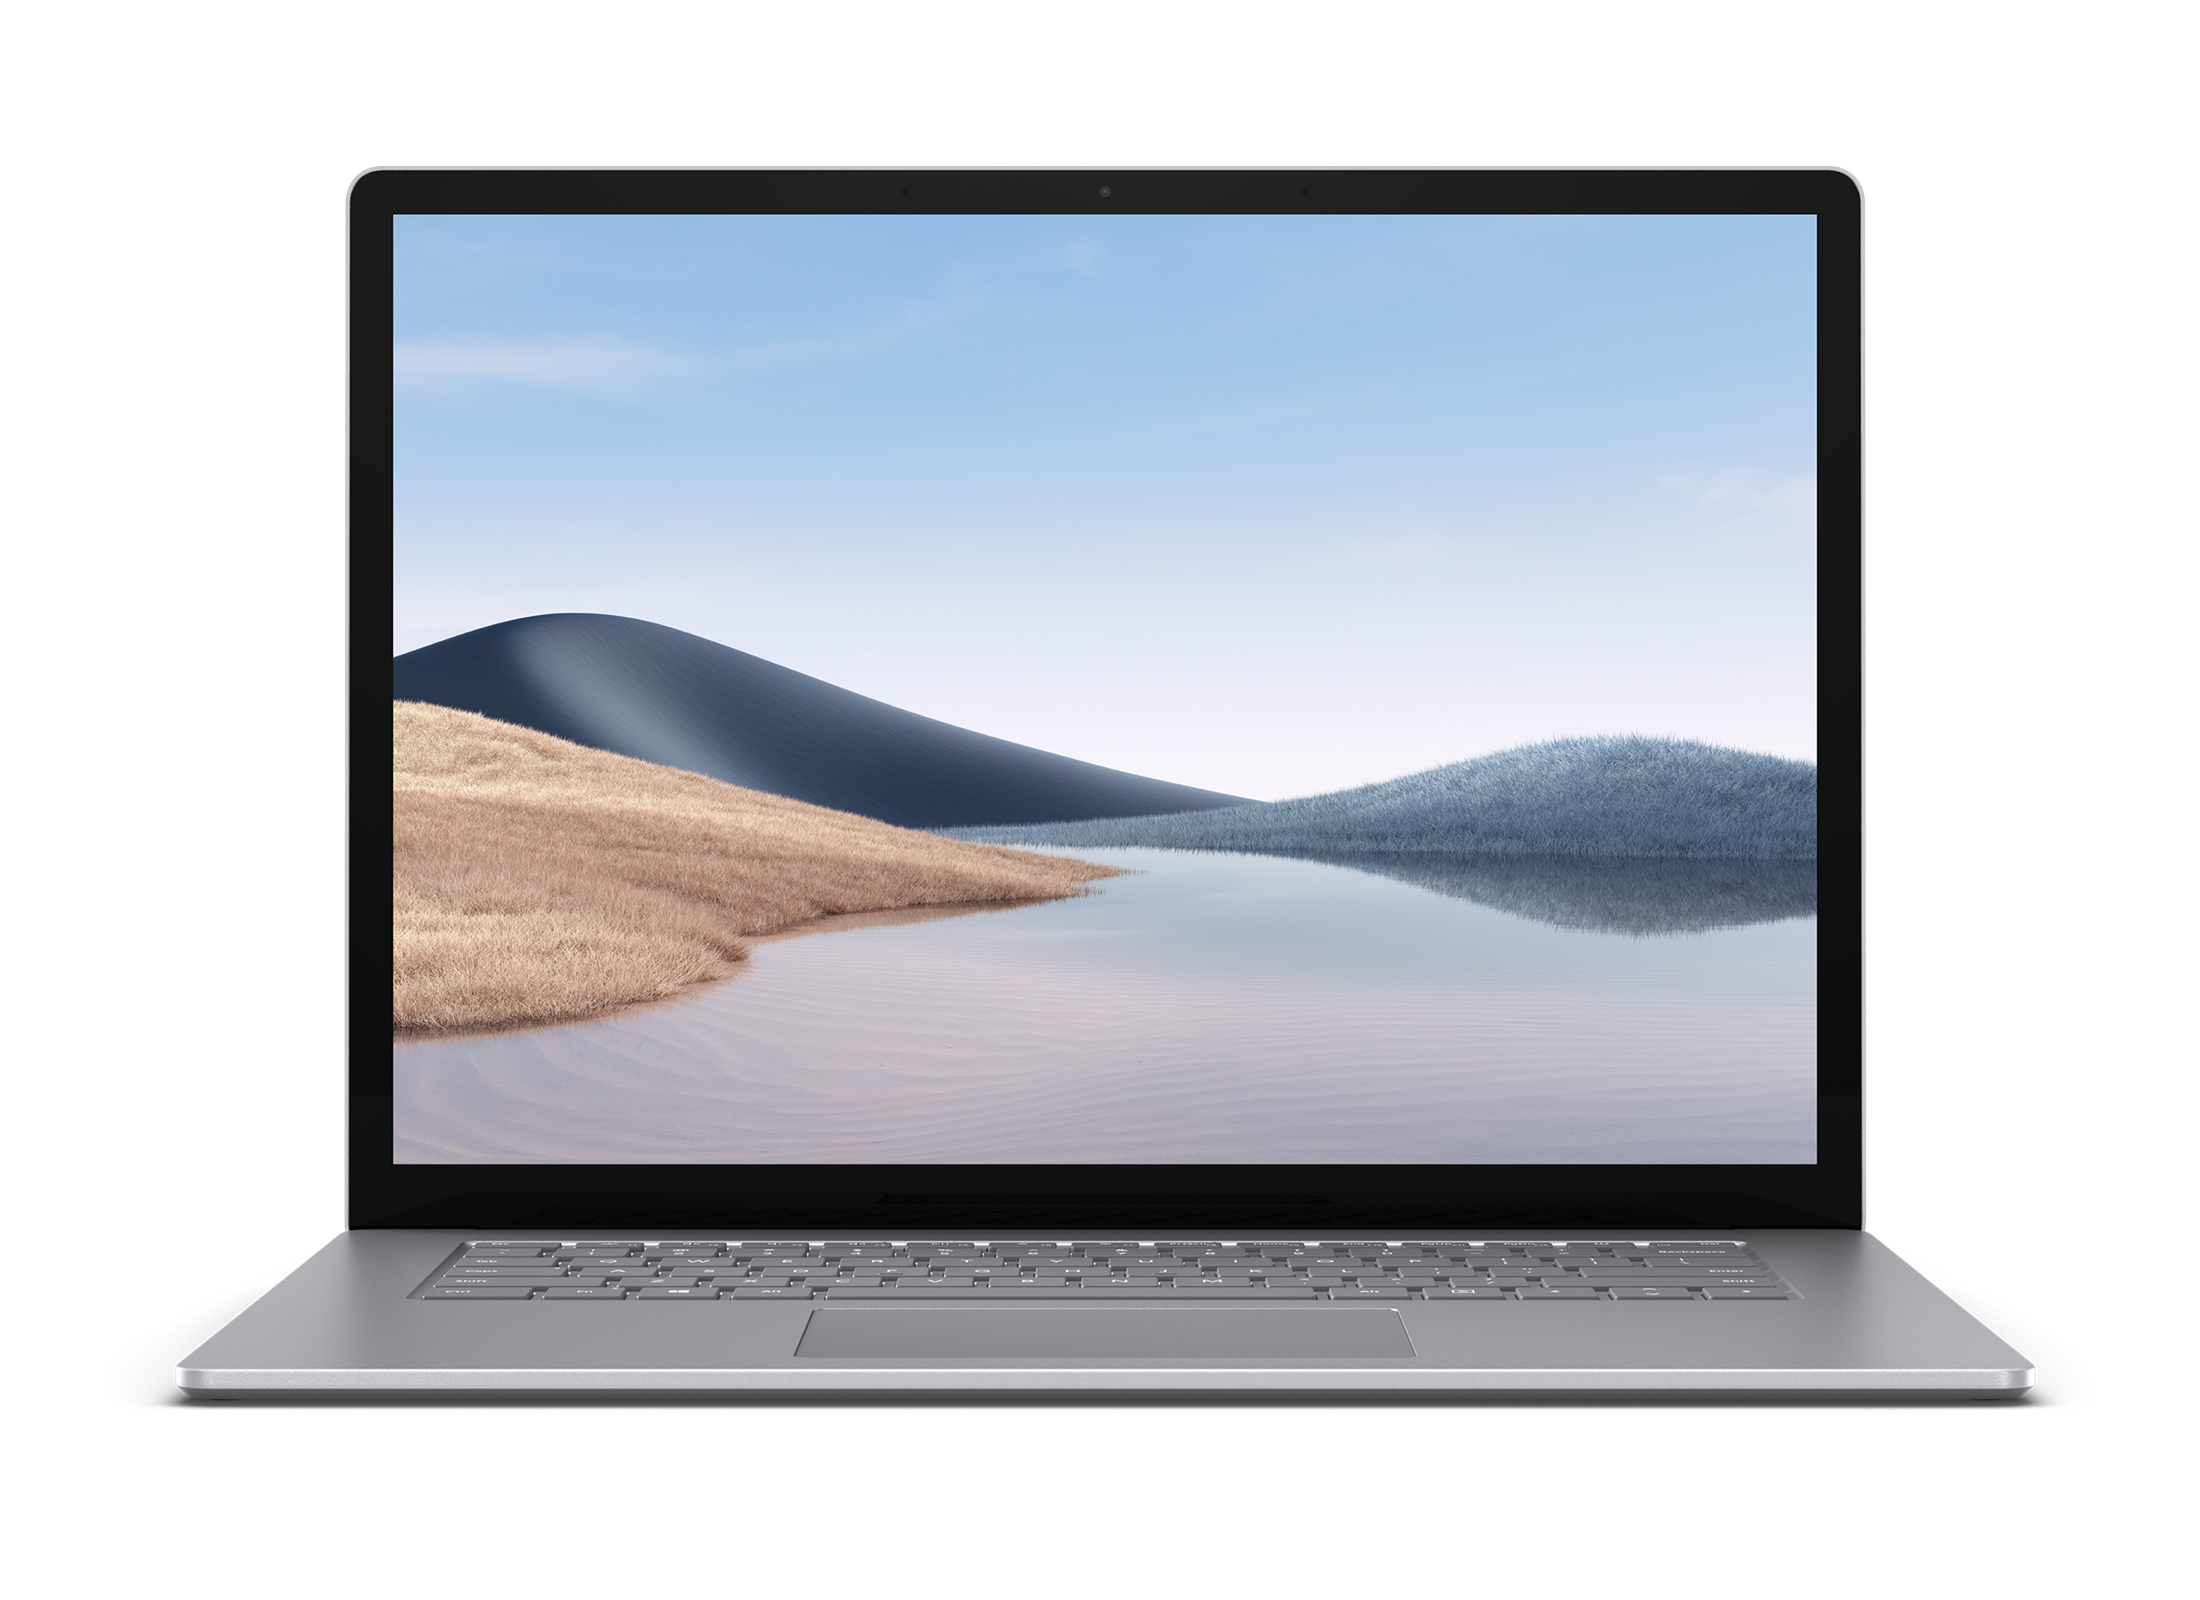 toewijzen inspanning filter Microsoft Surface Laptop 4 Surface Laptop 4 i7 8GB RAM 256GB SSD  (5JI-00007) kopen » Centralpoint